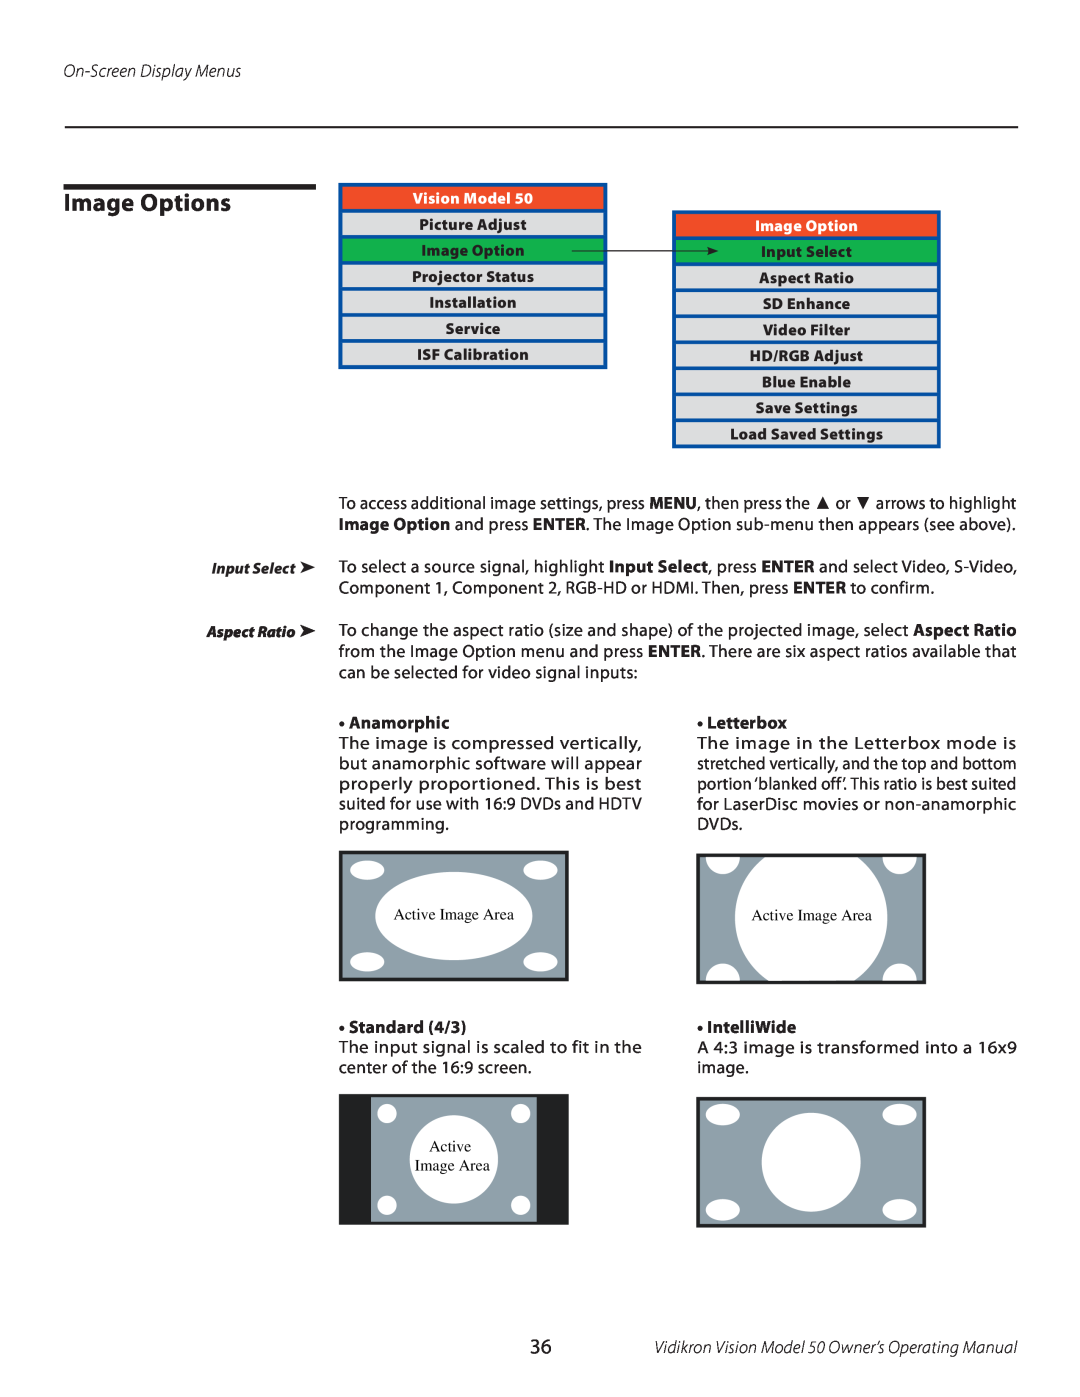 Vidikron 50 manual Image Options, Anamorphic, Letterbox, Standard 4/3, IntelliWide, On-Screen Display Menus 